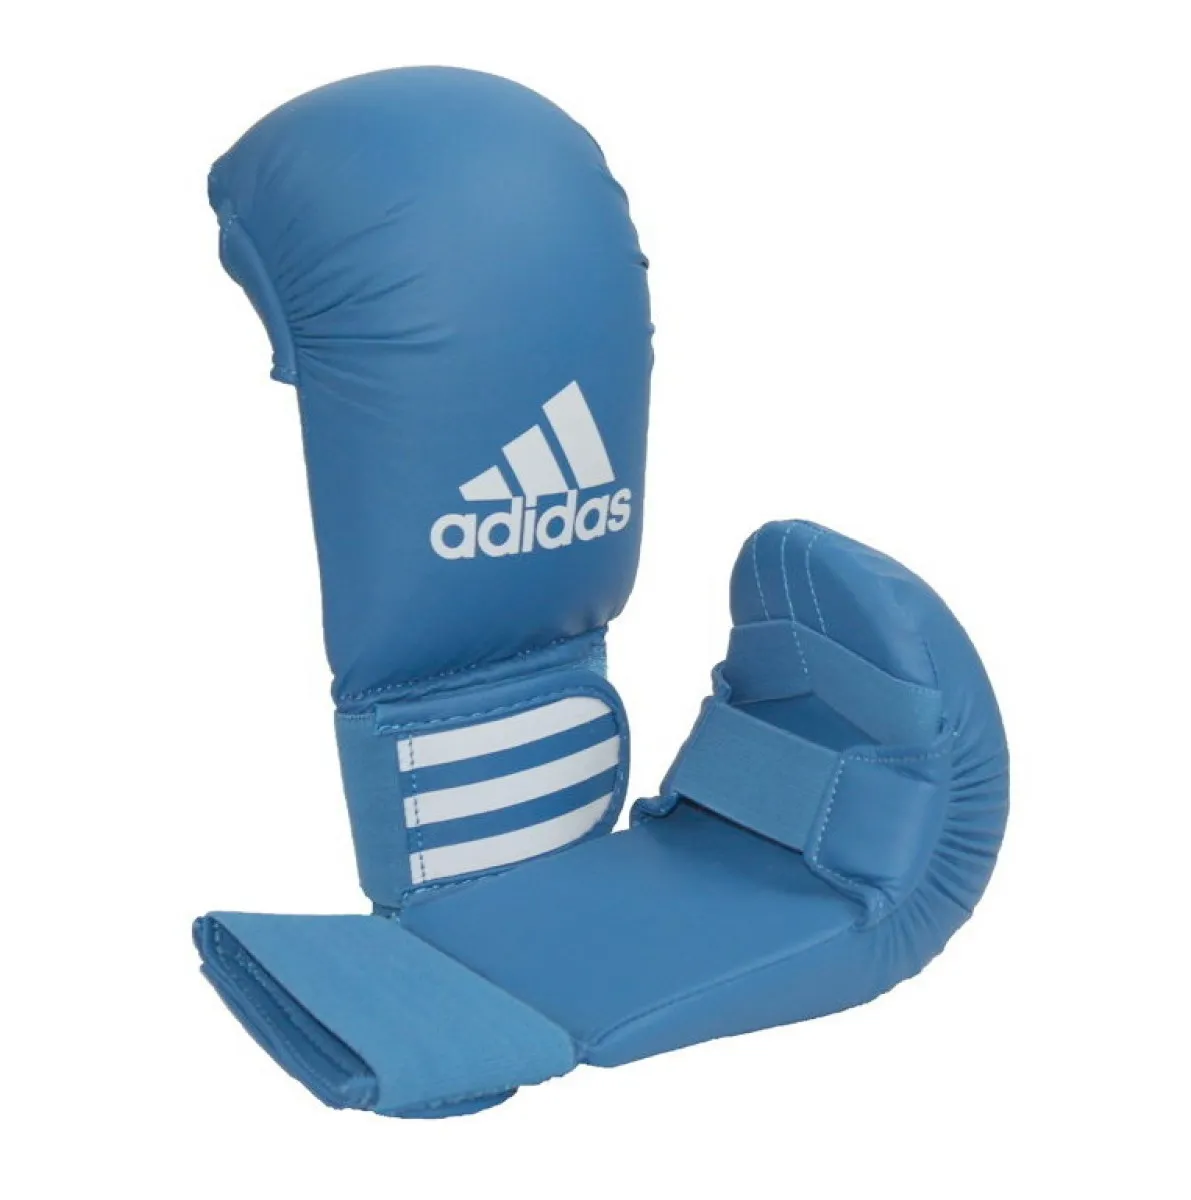 Fist protector adidas Training blue